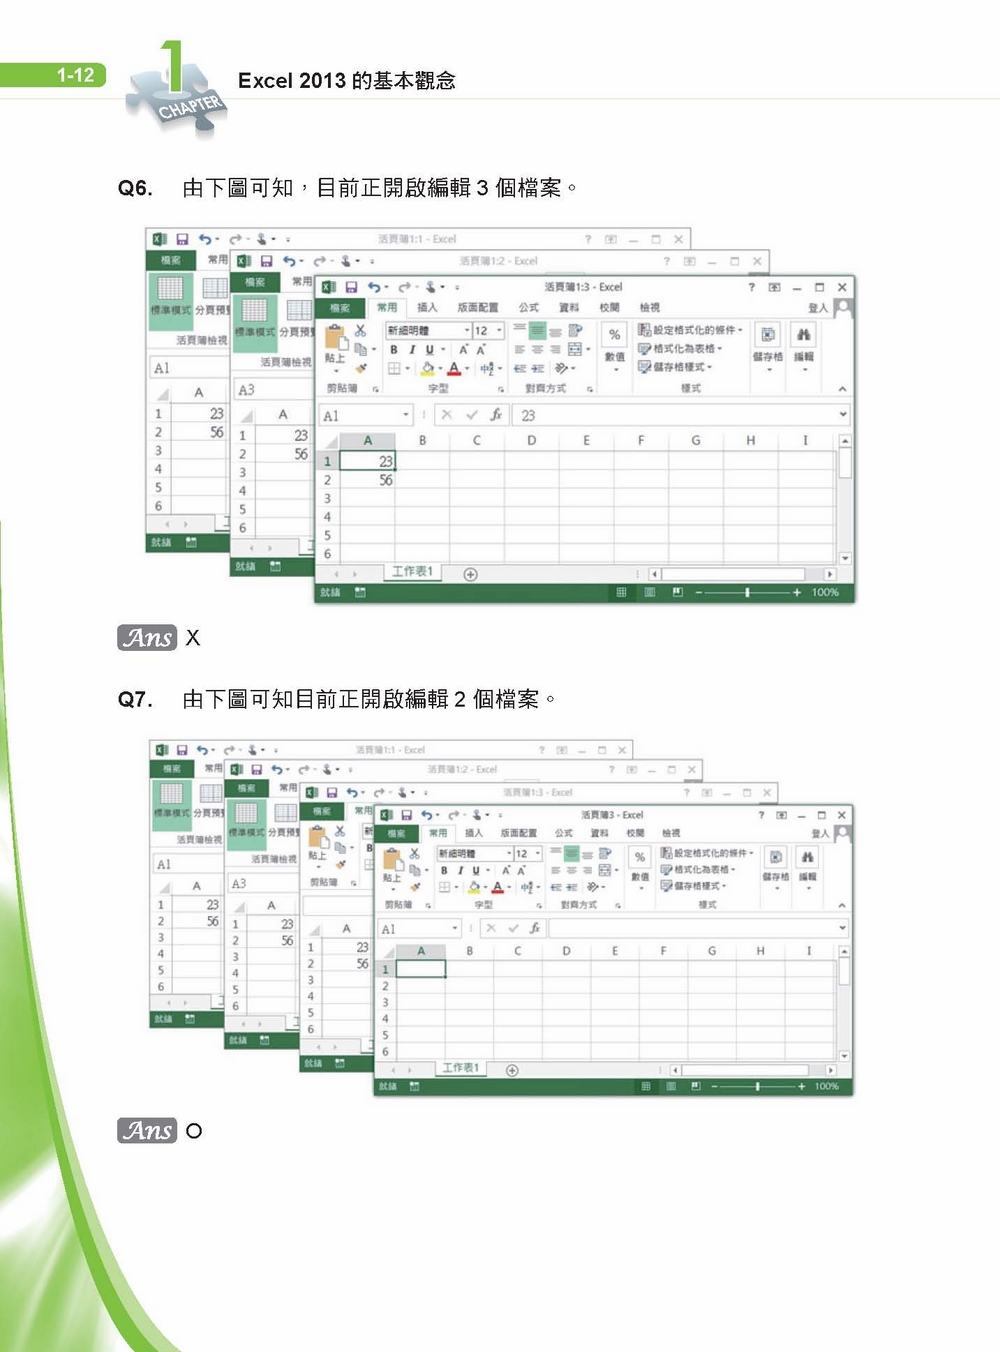 ►GO►最新優惠► 【書籍】Excel 2013 教學範本(適用SiliconStone認證考試教材)